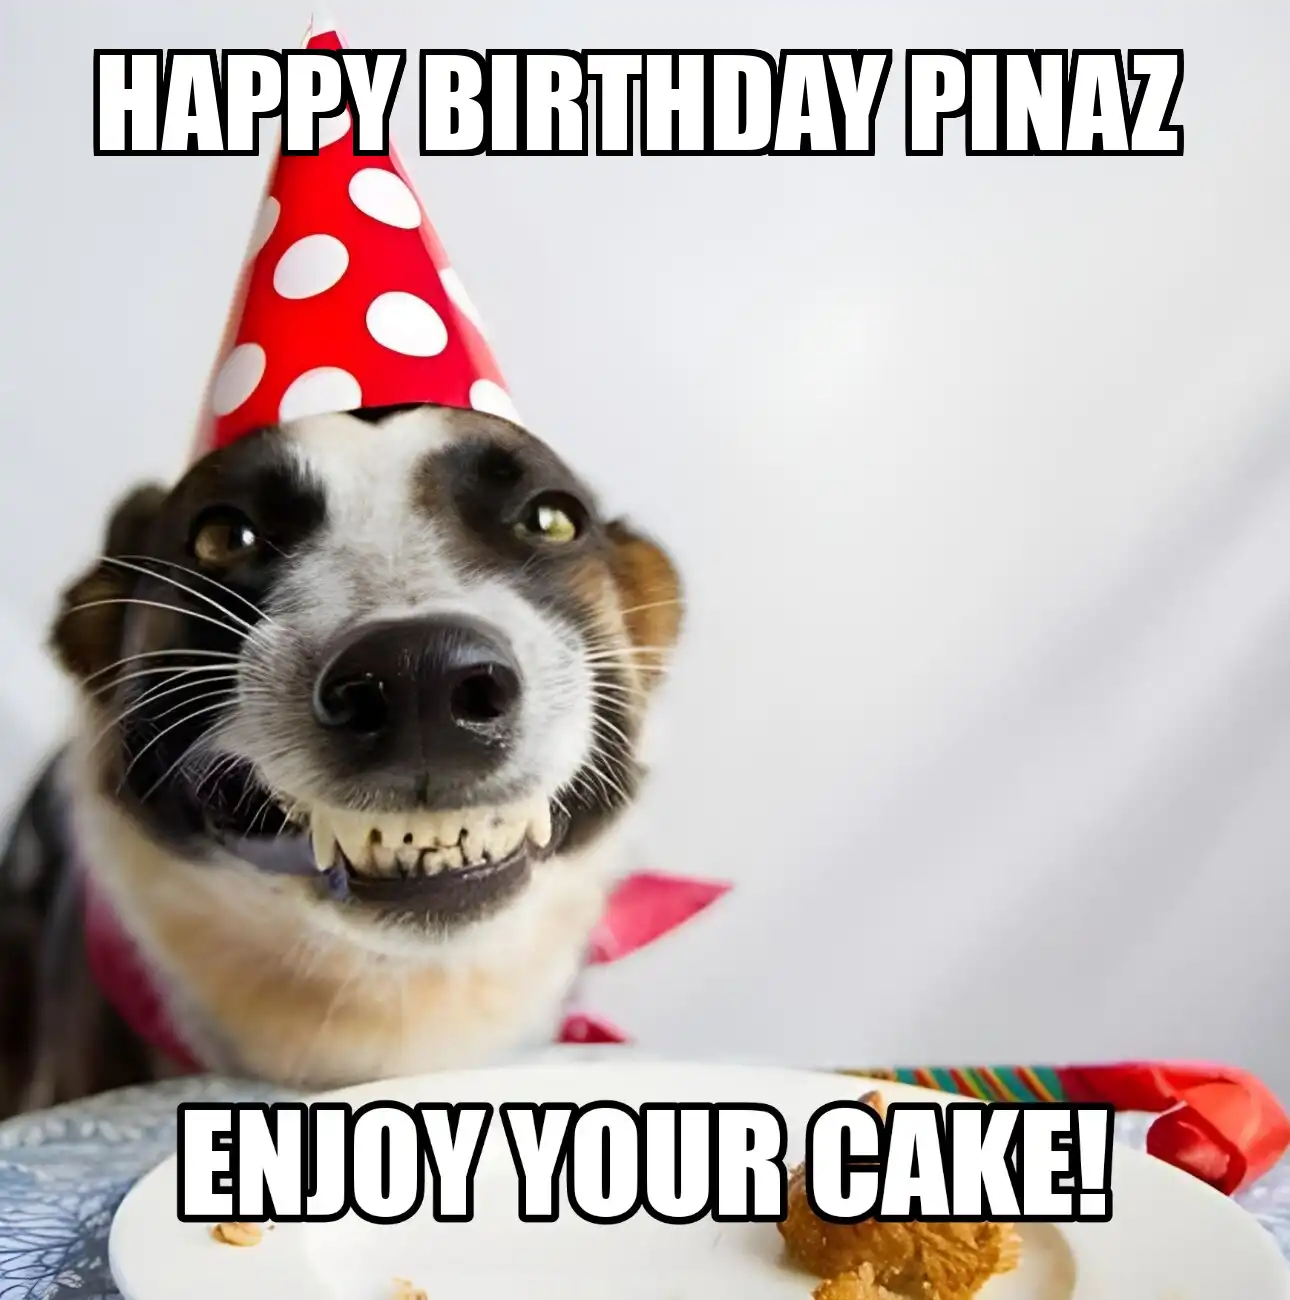 Happy Birthday Pinaz Enjoy Your Cake Dog Meme